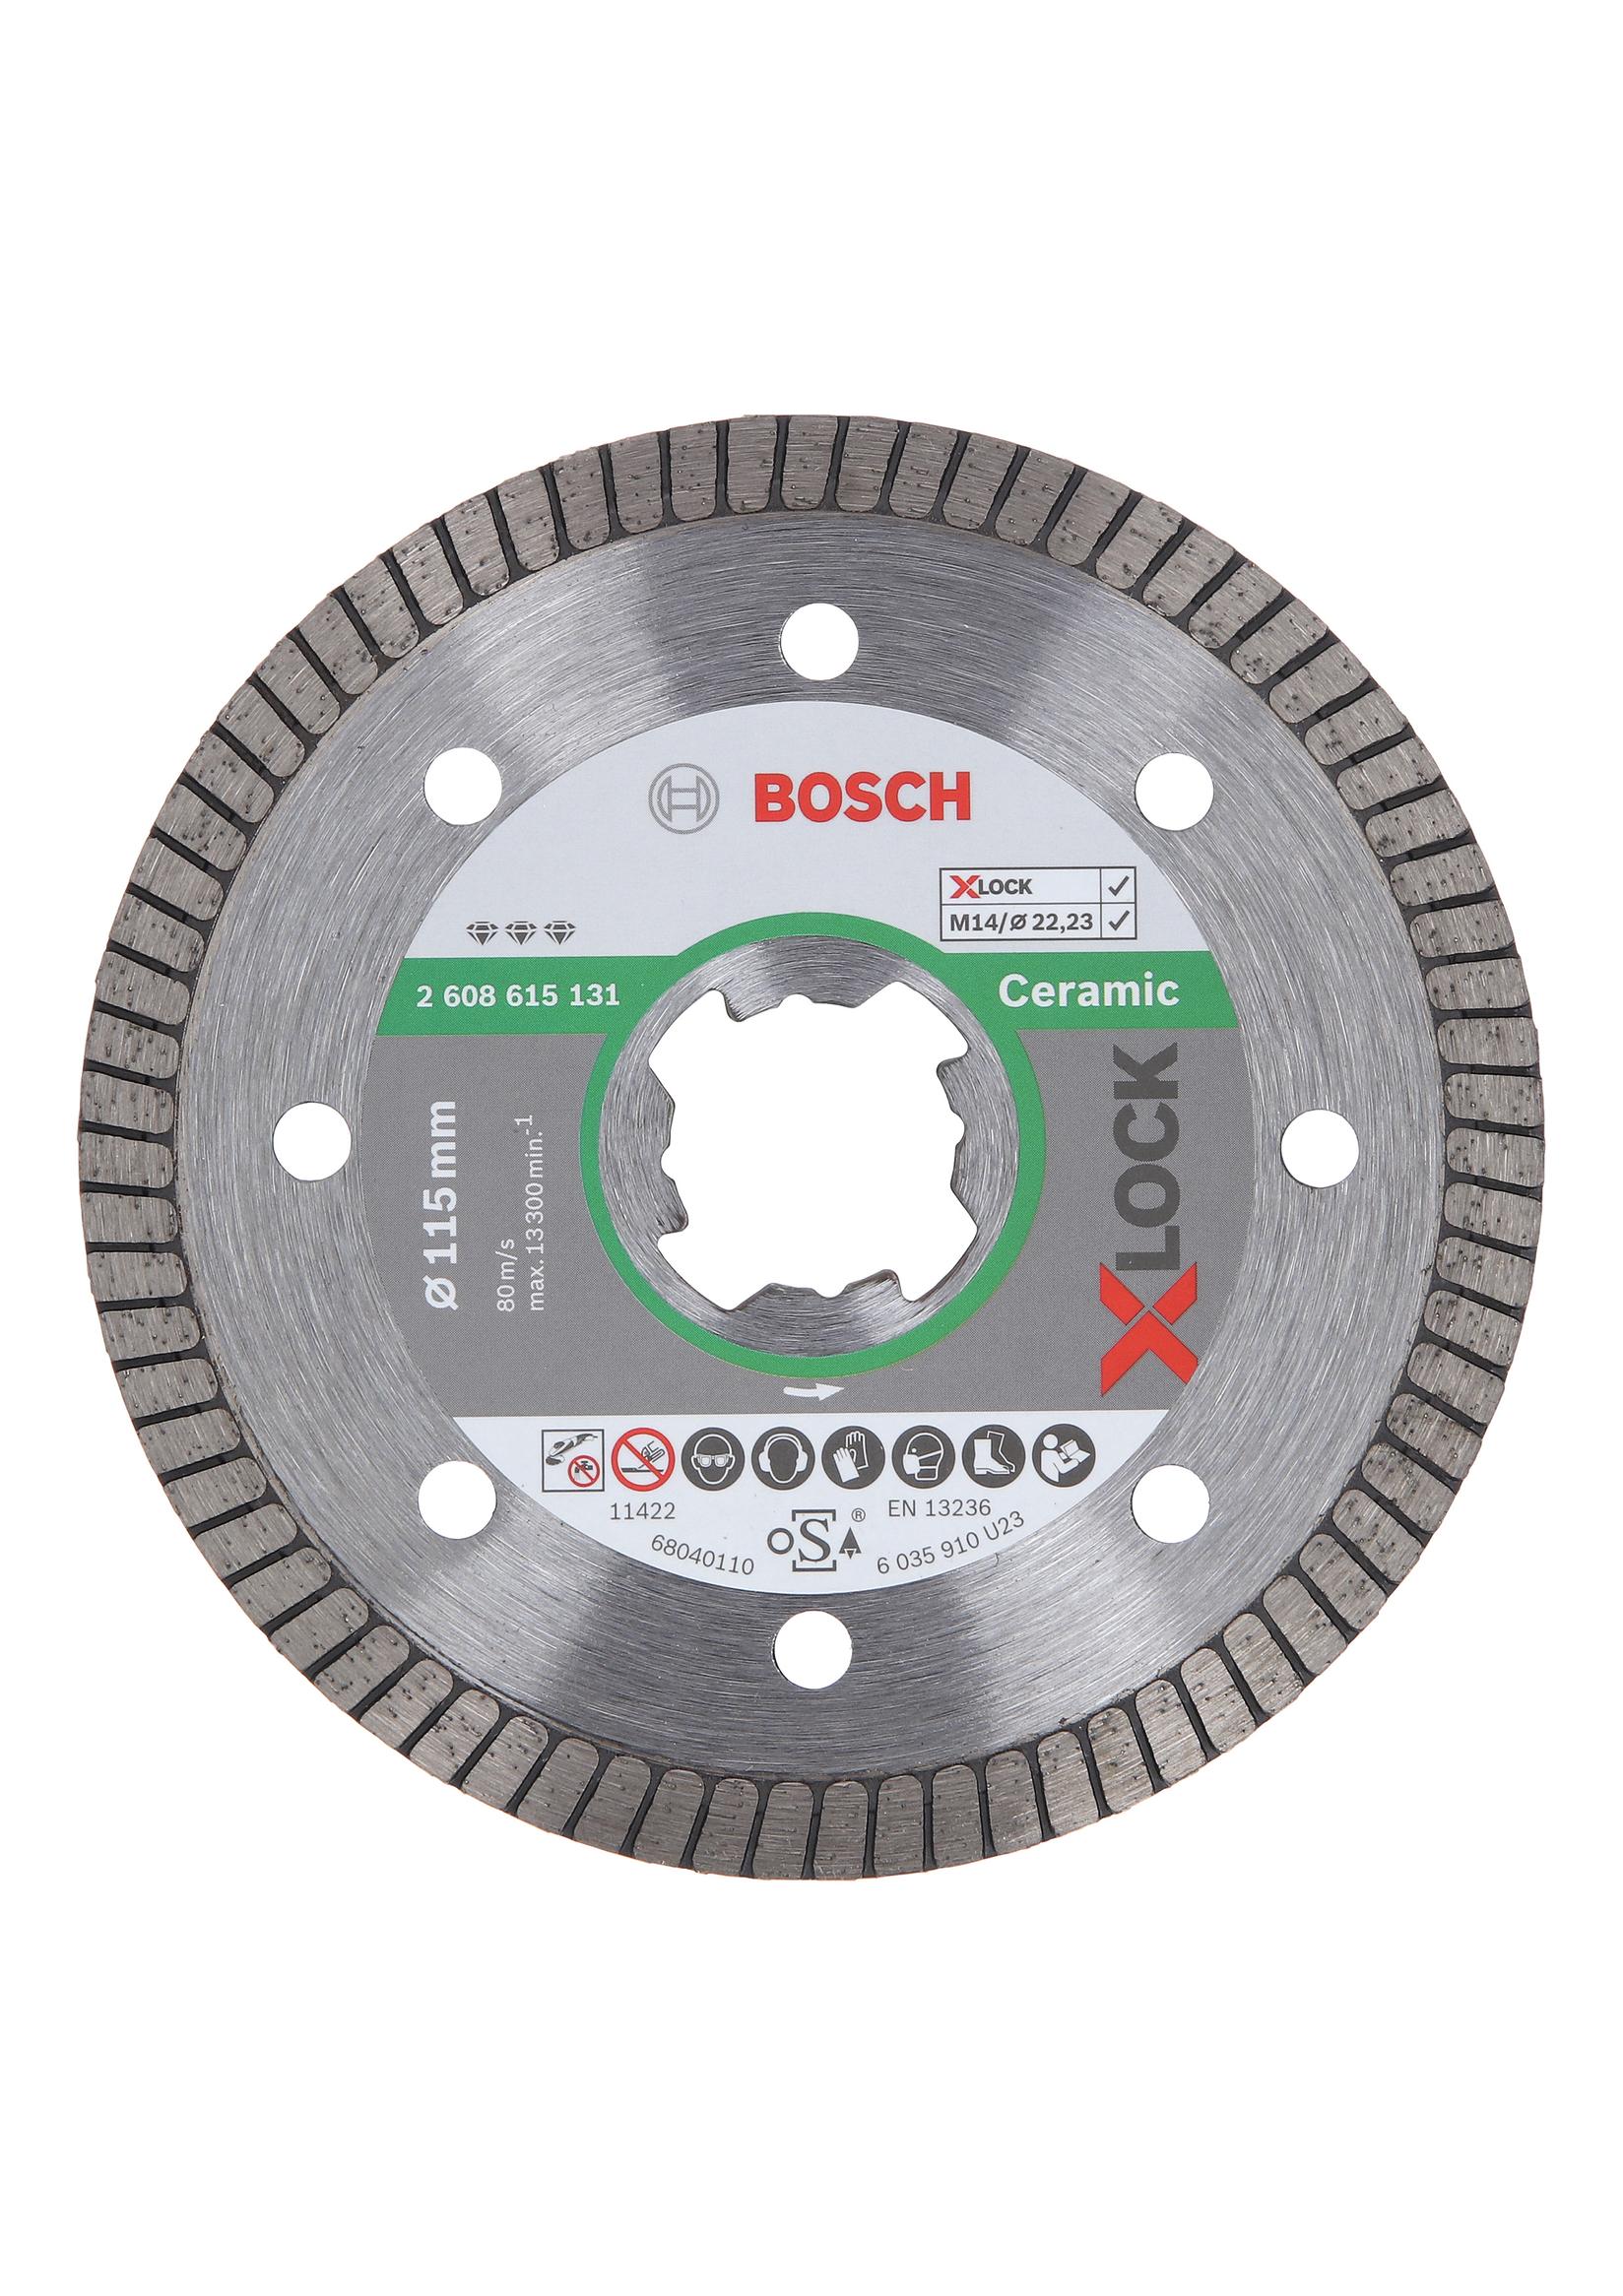 Bosch X-LOCK Best for Ceramic Extraclean Turbo dijamantska rezna ploča 115x22,23x1,4x7 2608615131, 115 x 22,23 x 1,4 x 7 mm